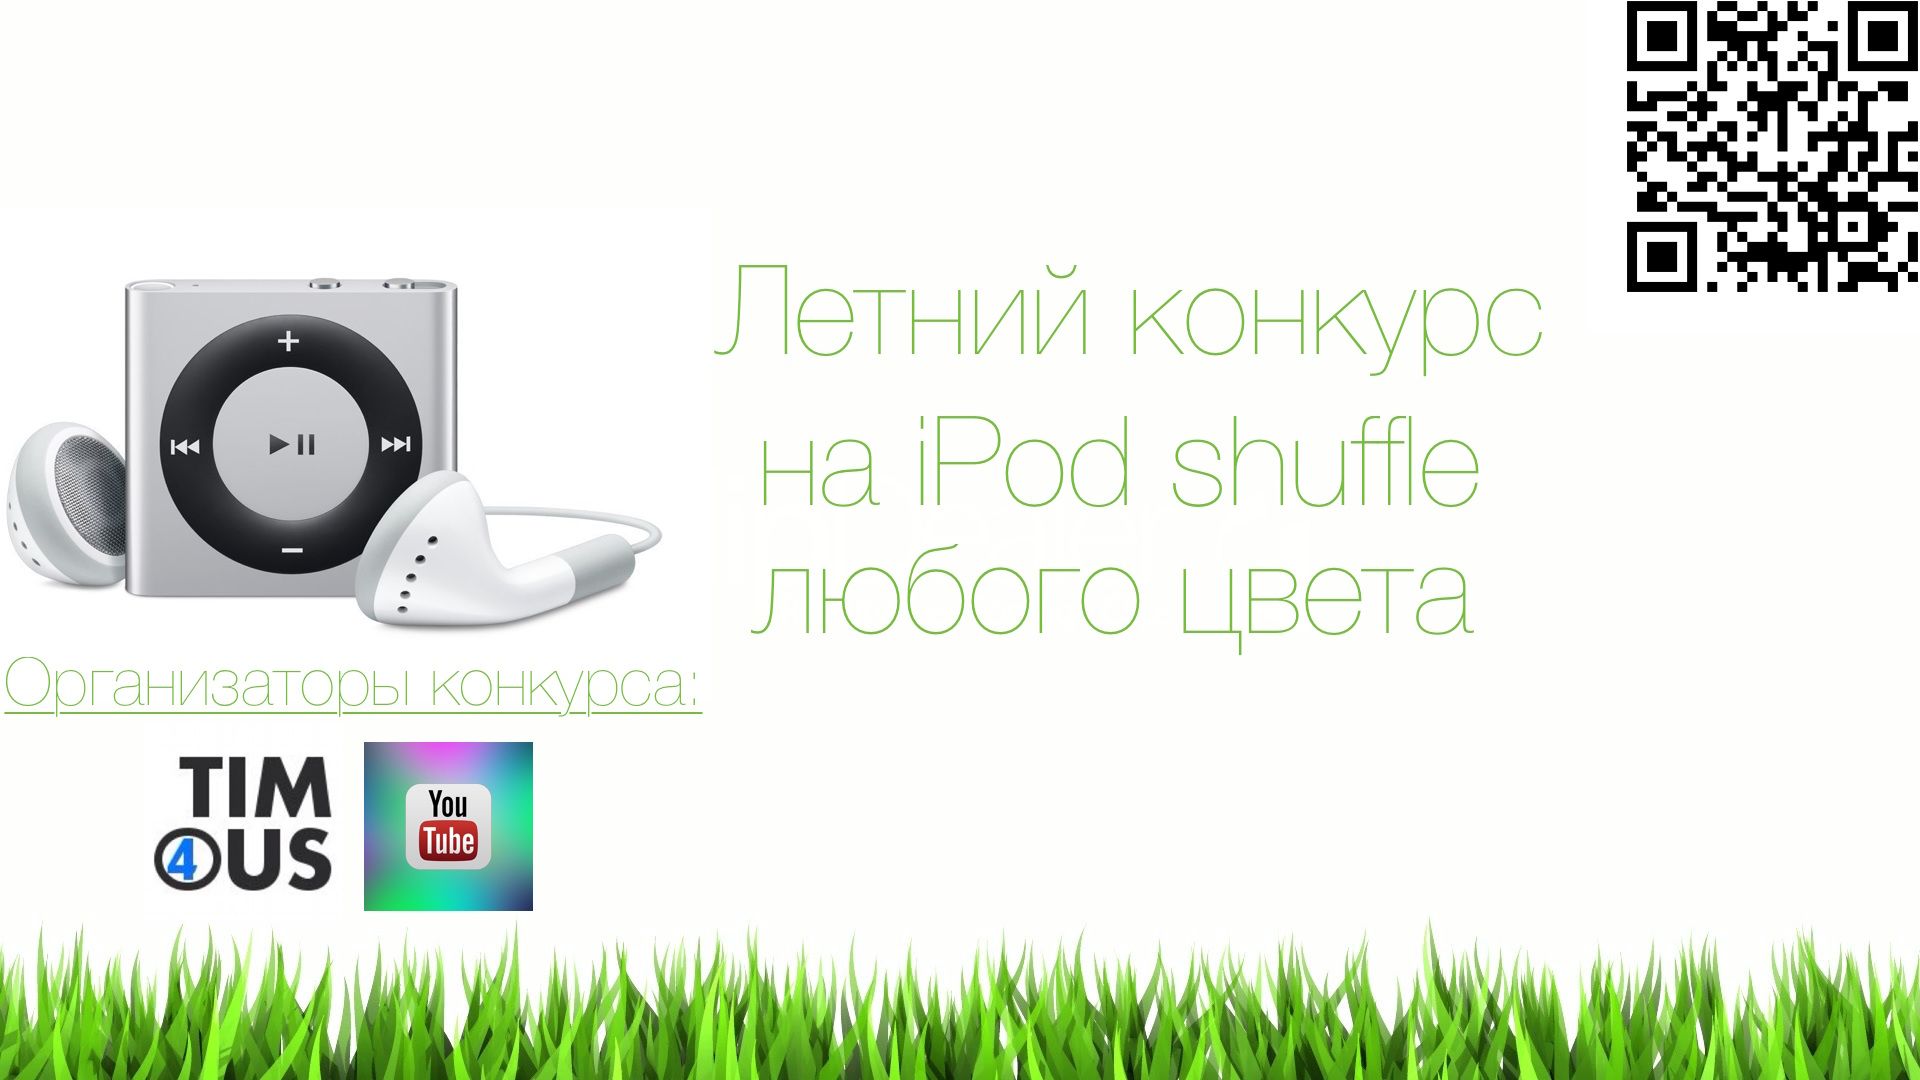 КОНКУРС: Выиграй iPod shuffle любого цвета от сайта t4s.tech и канала iDimaProduction